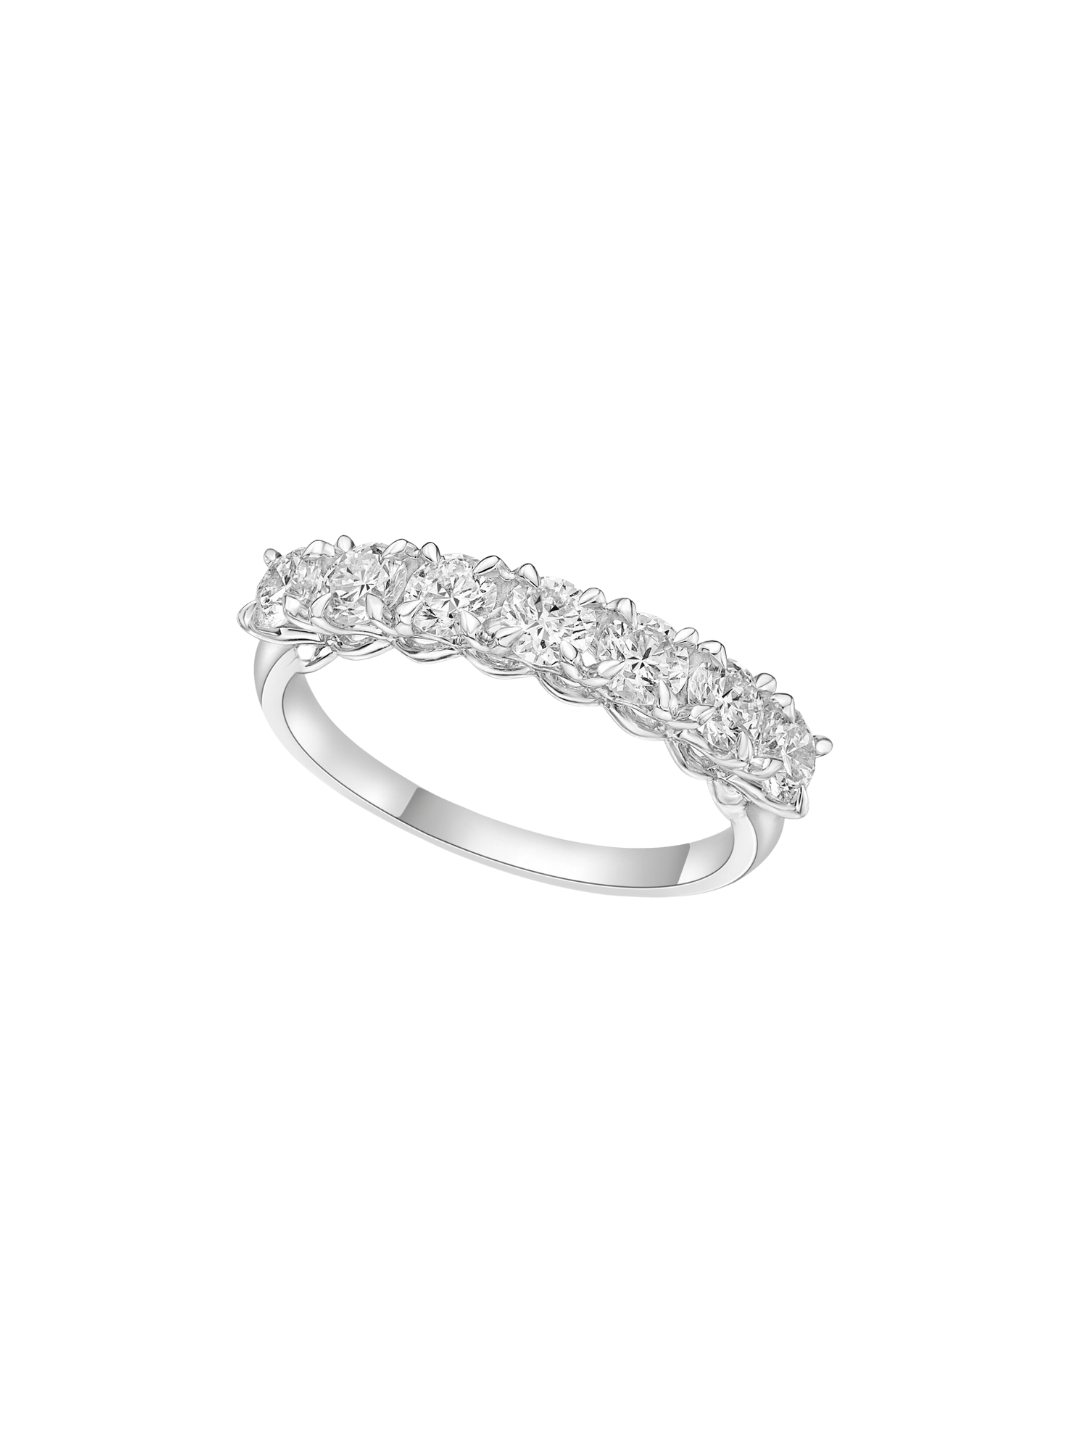 half eternity ring diamond ring women's jewelry